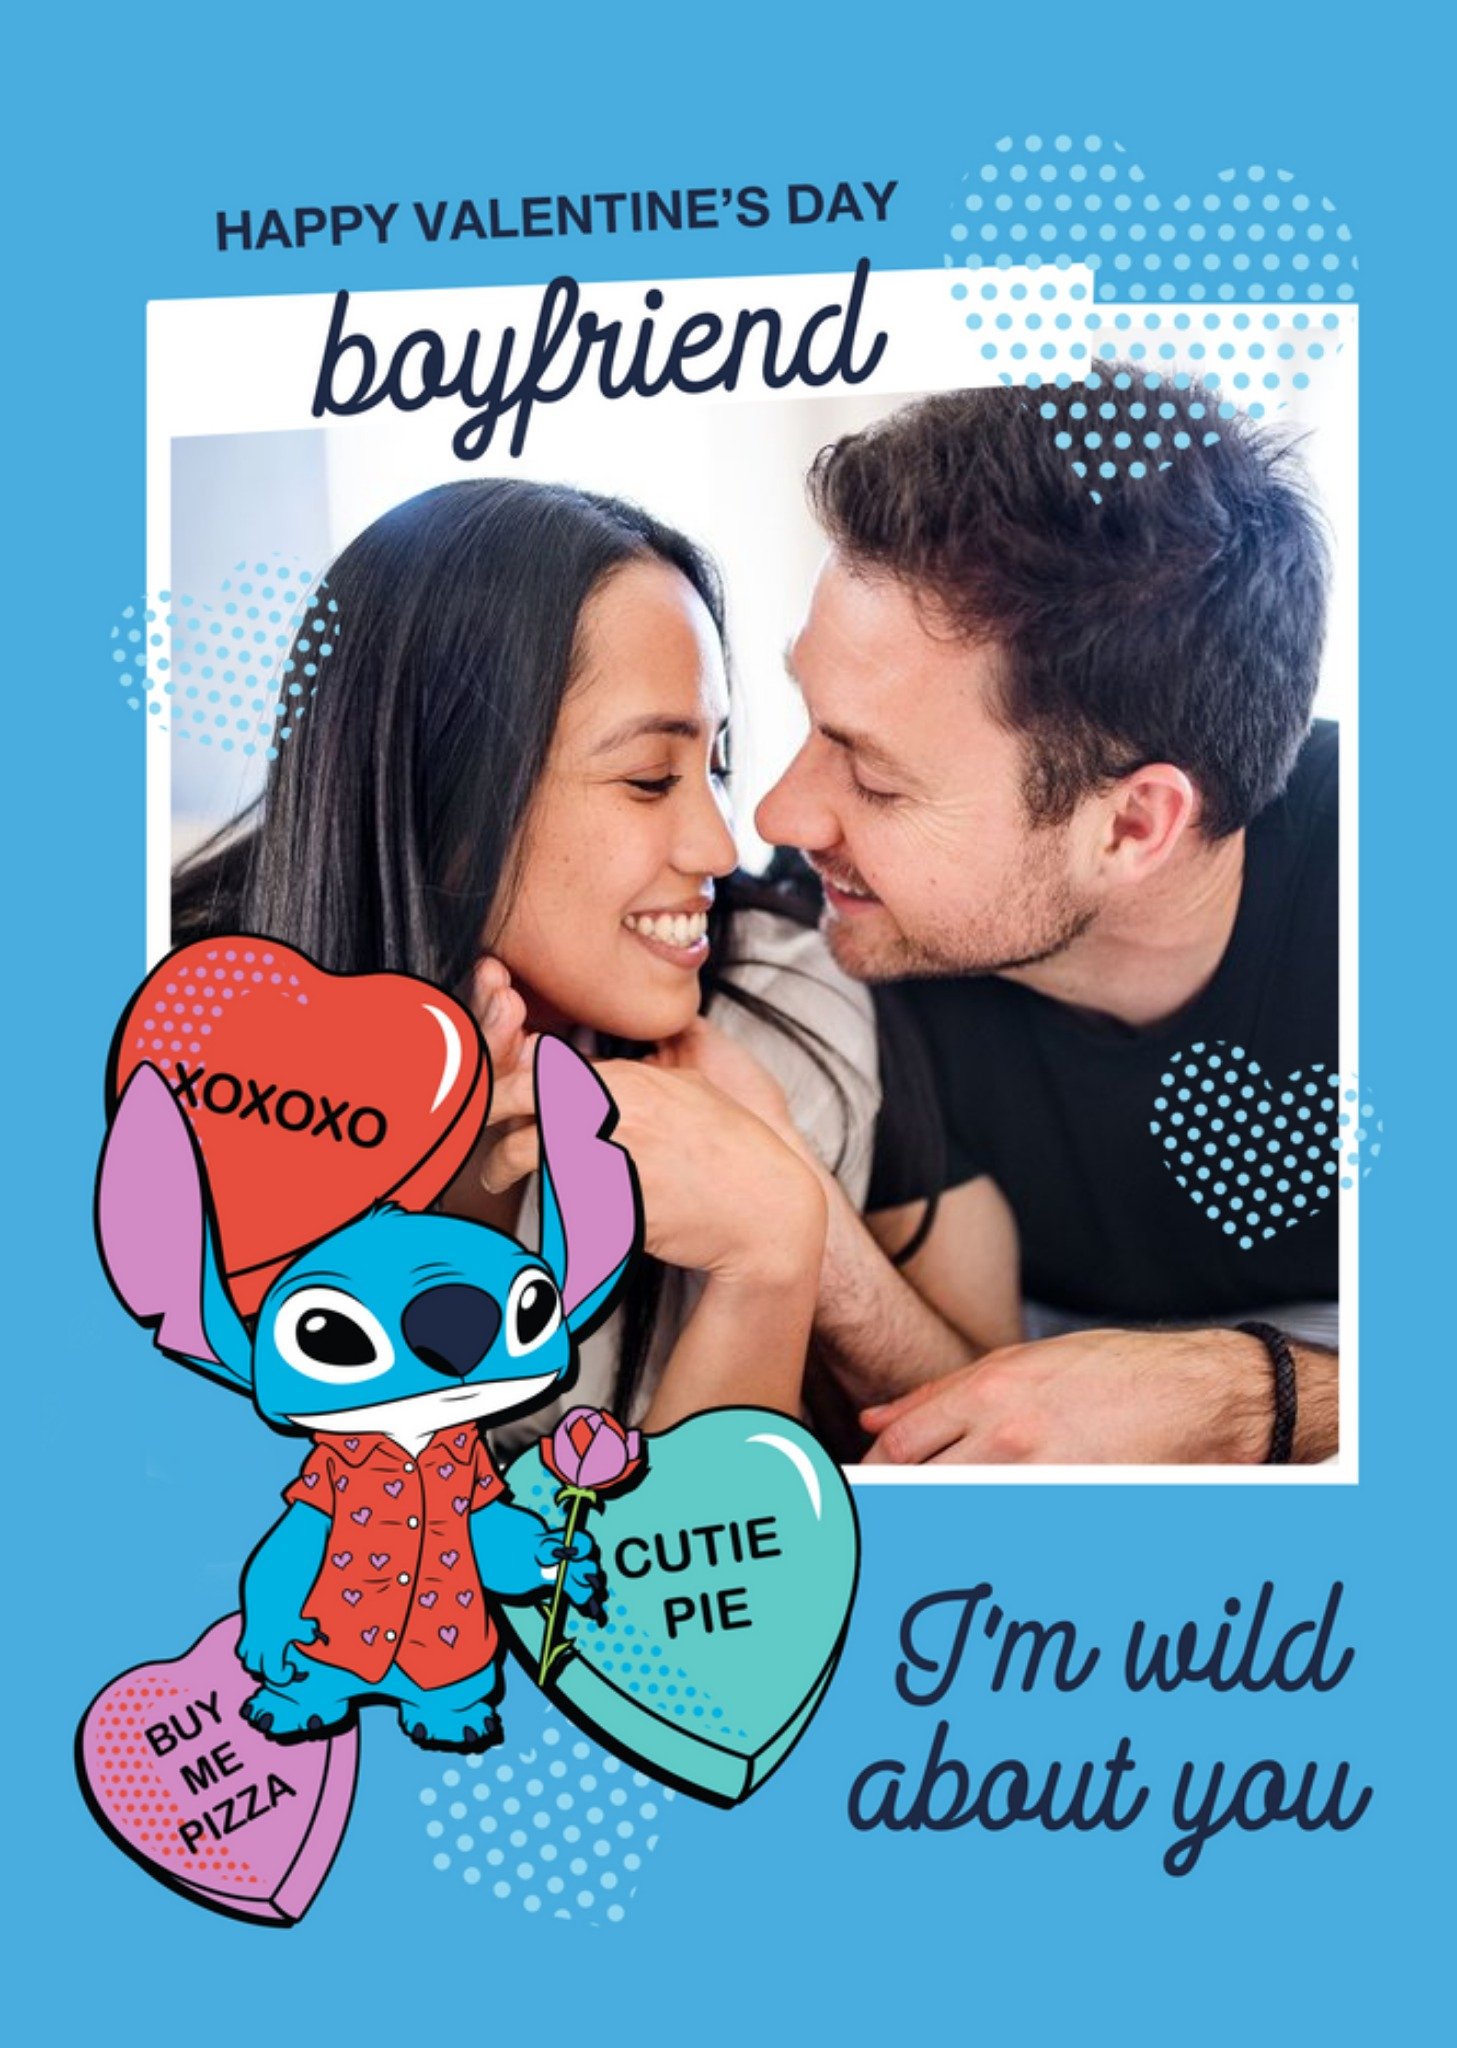 Disney Lilo And Stitch Wild About You Photo Upload Valentine's Card Ecard